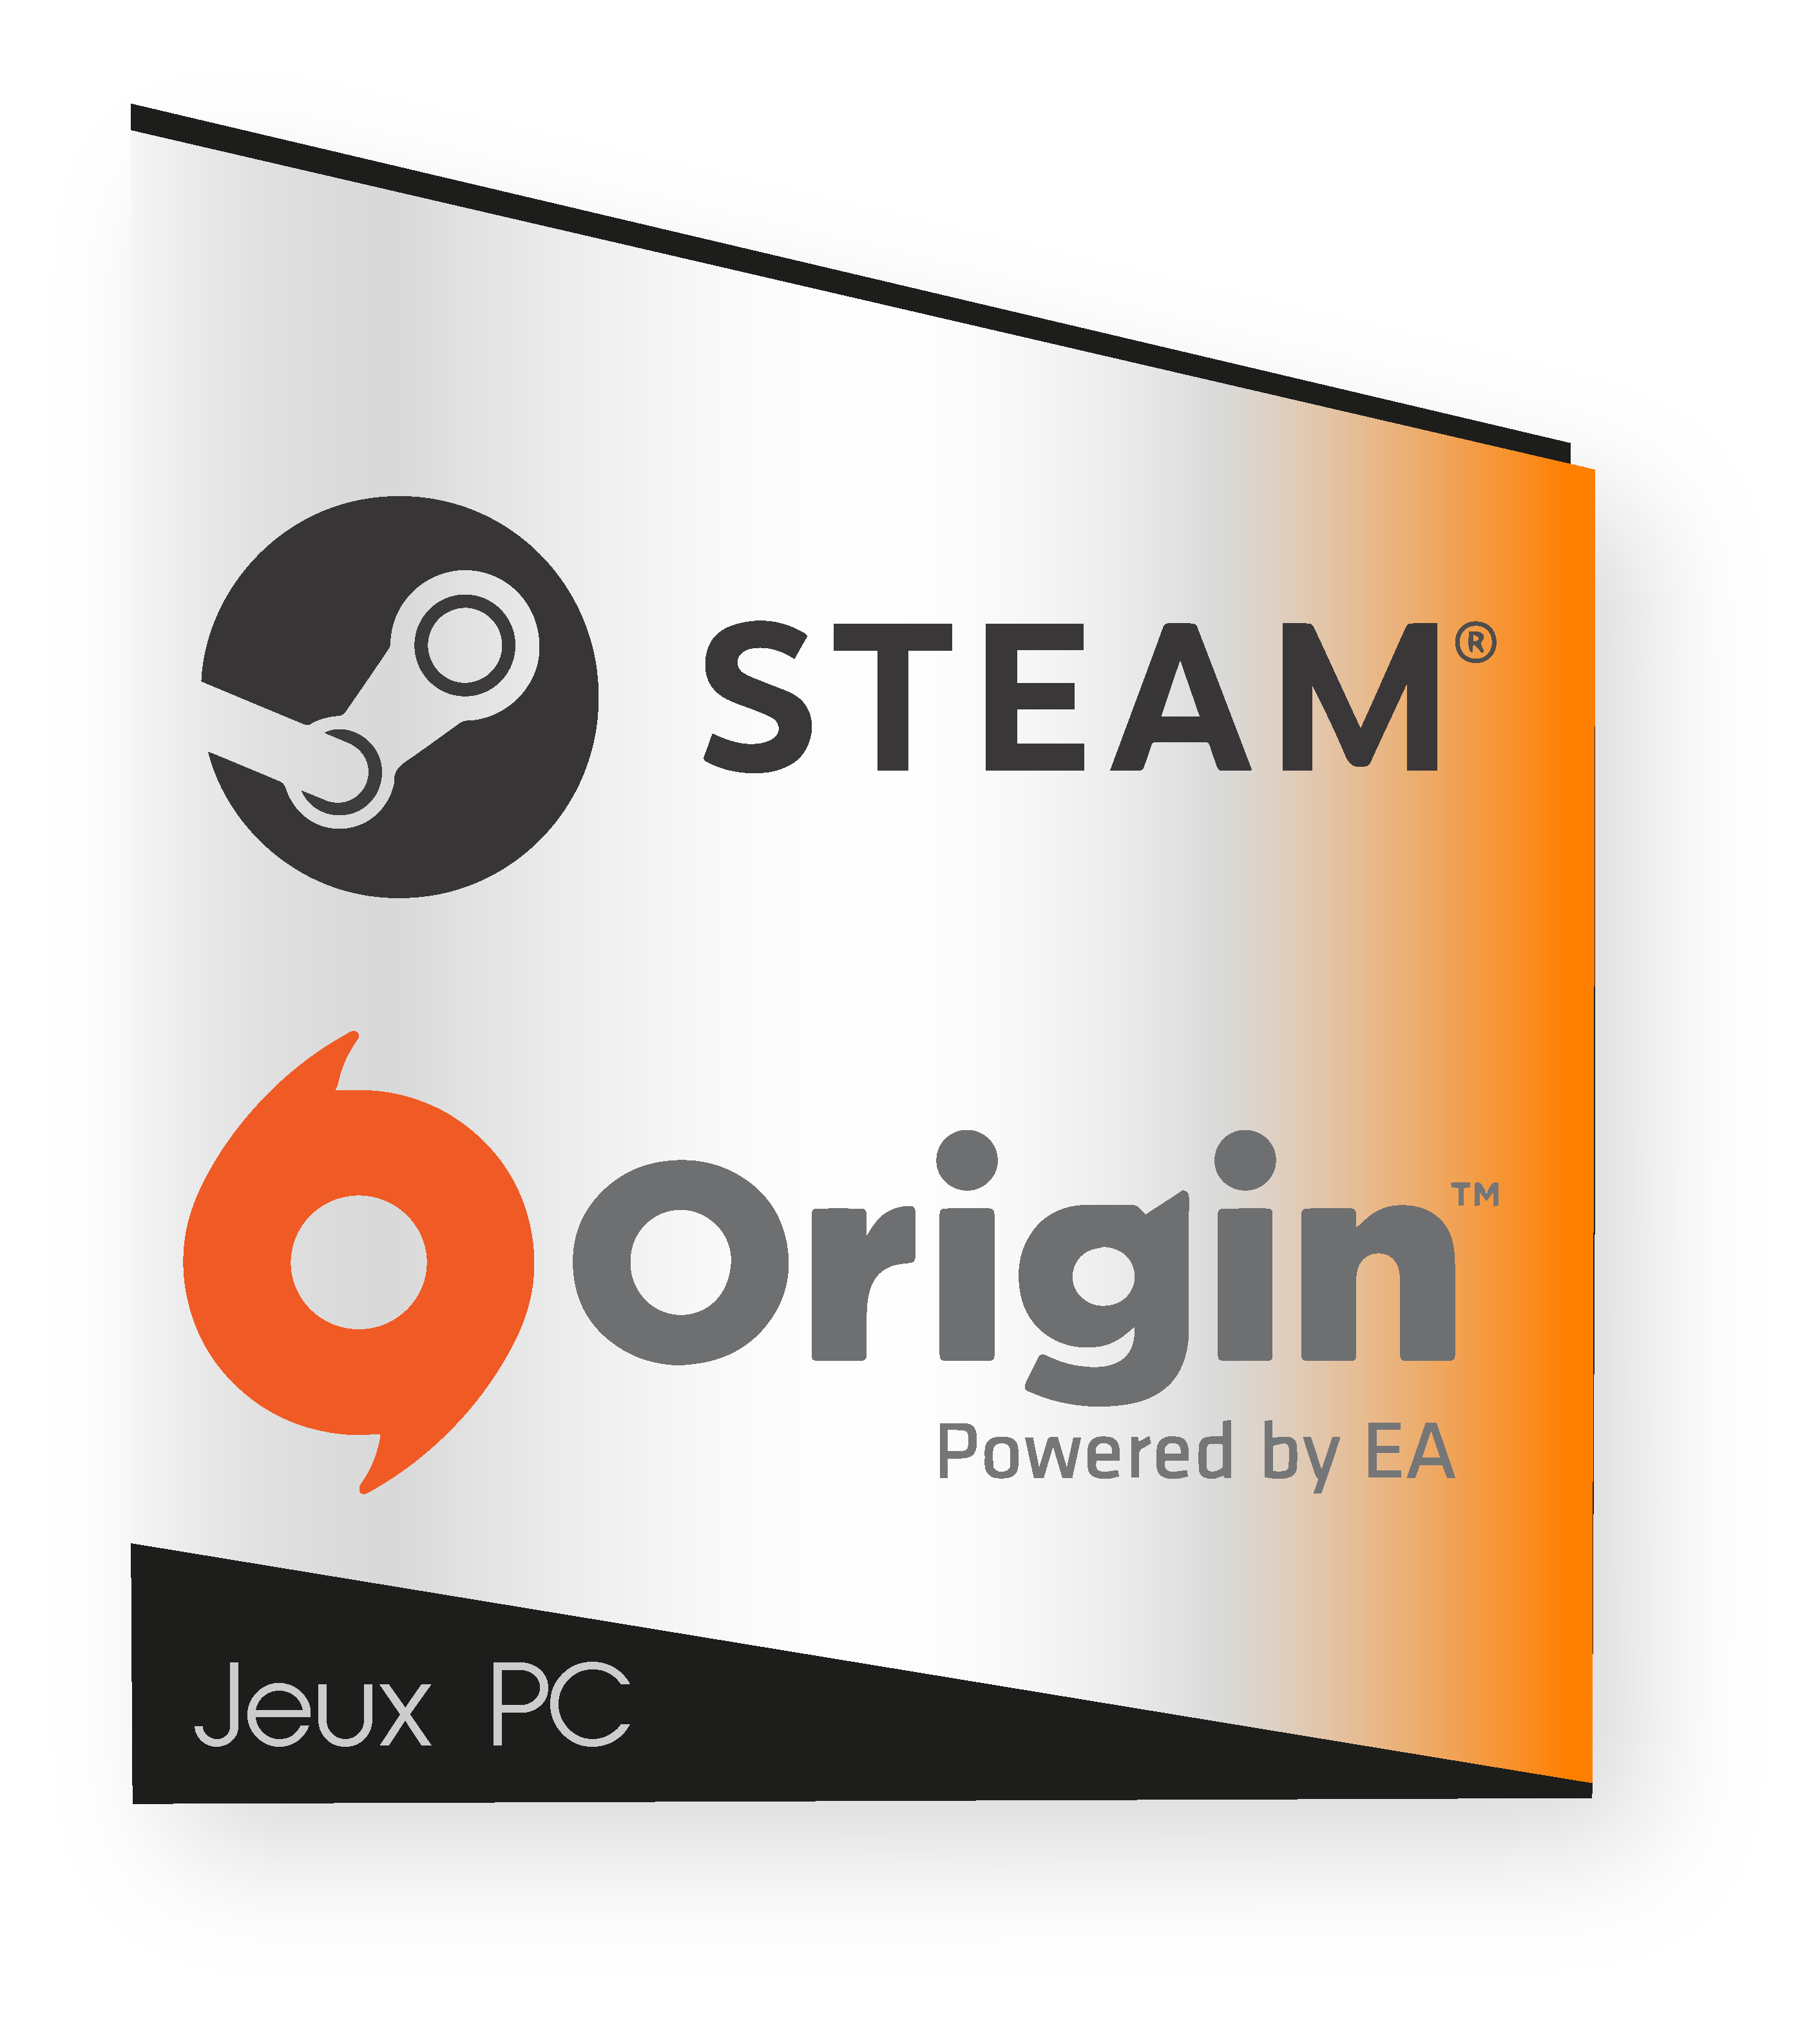 Image logo Jeux PC